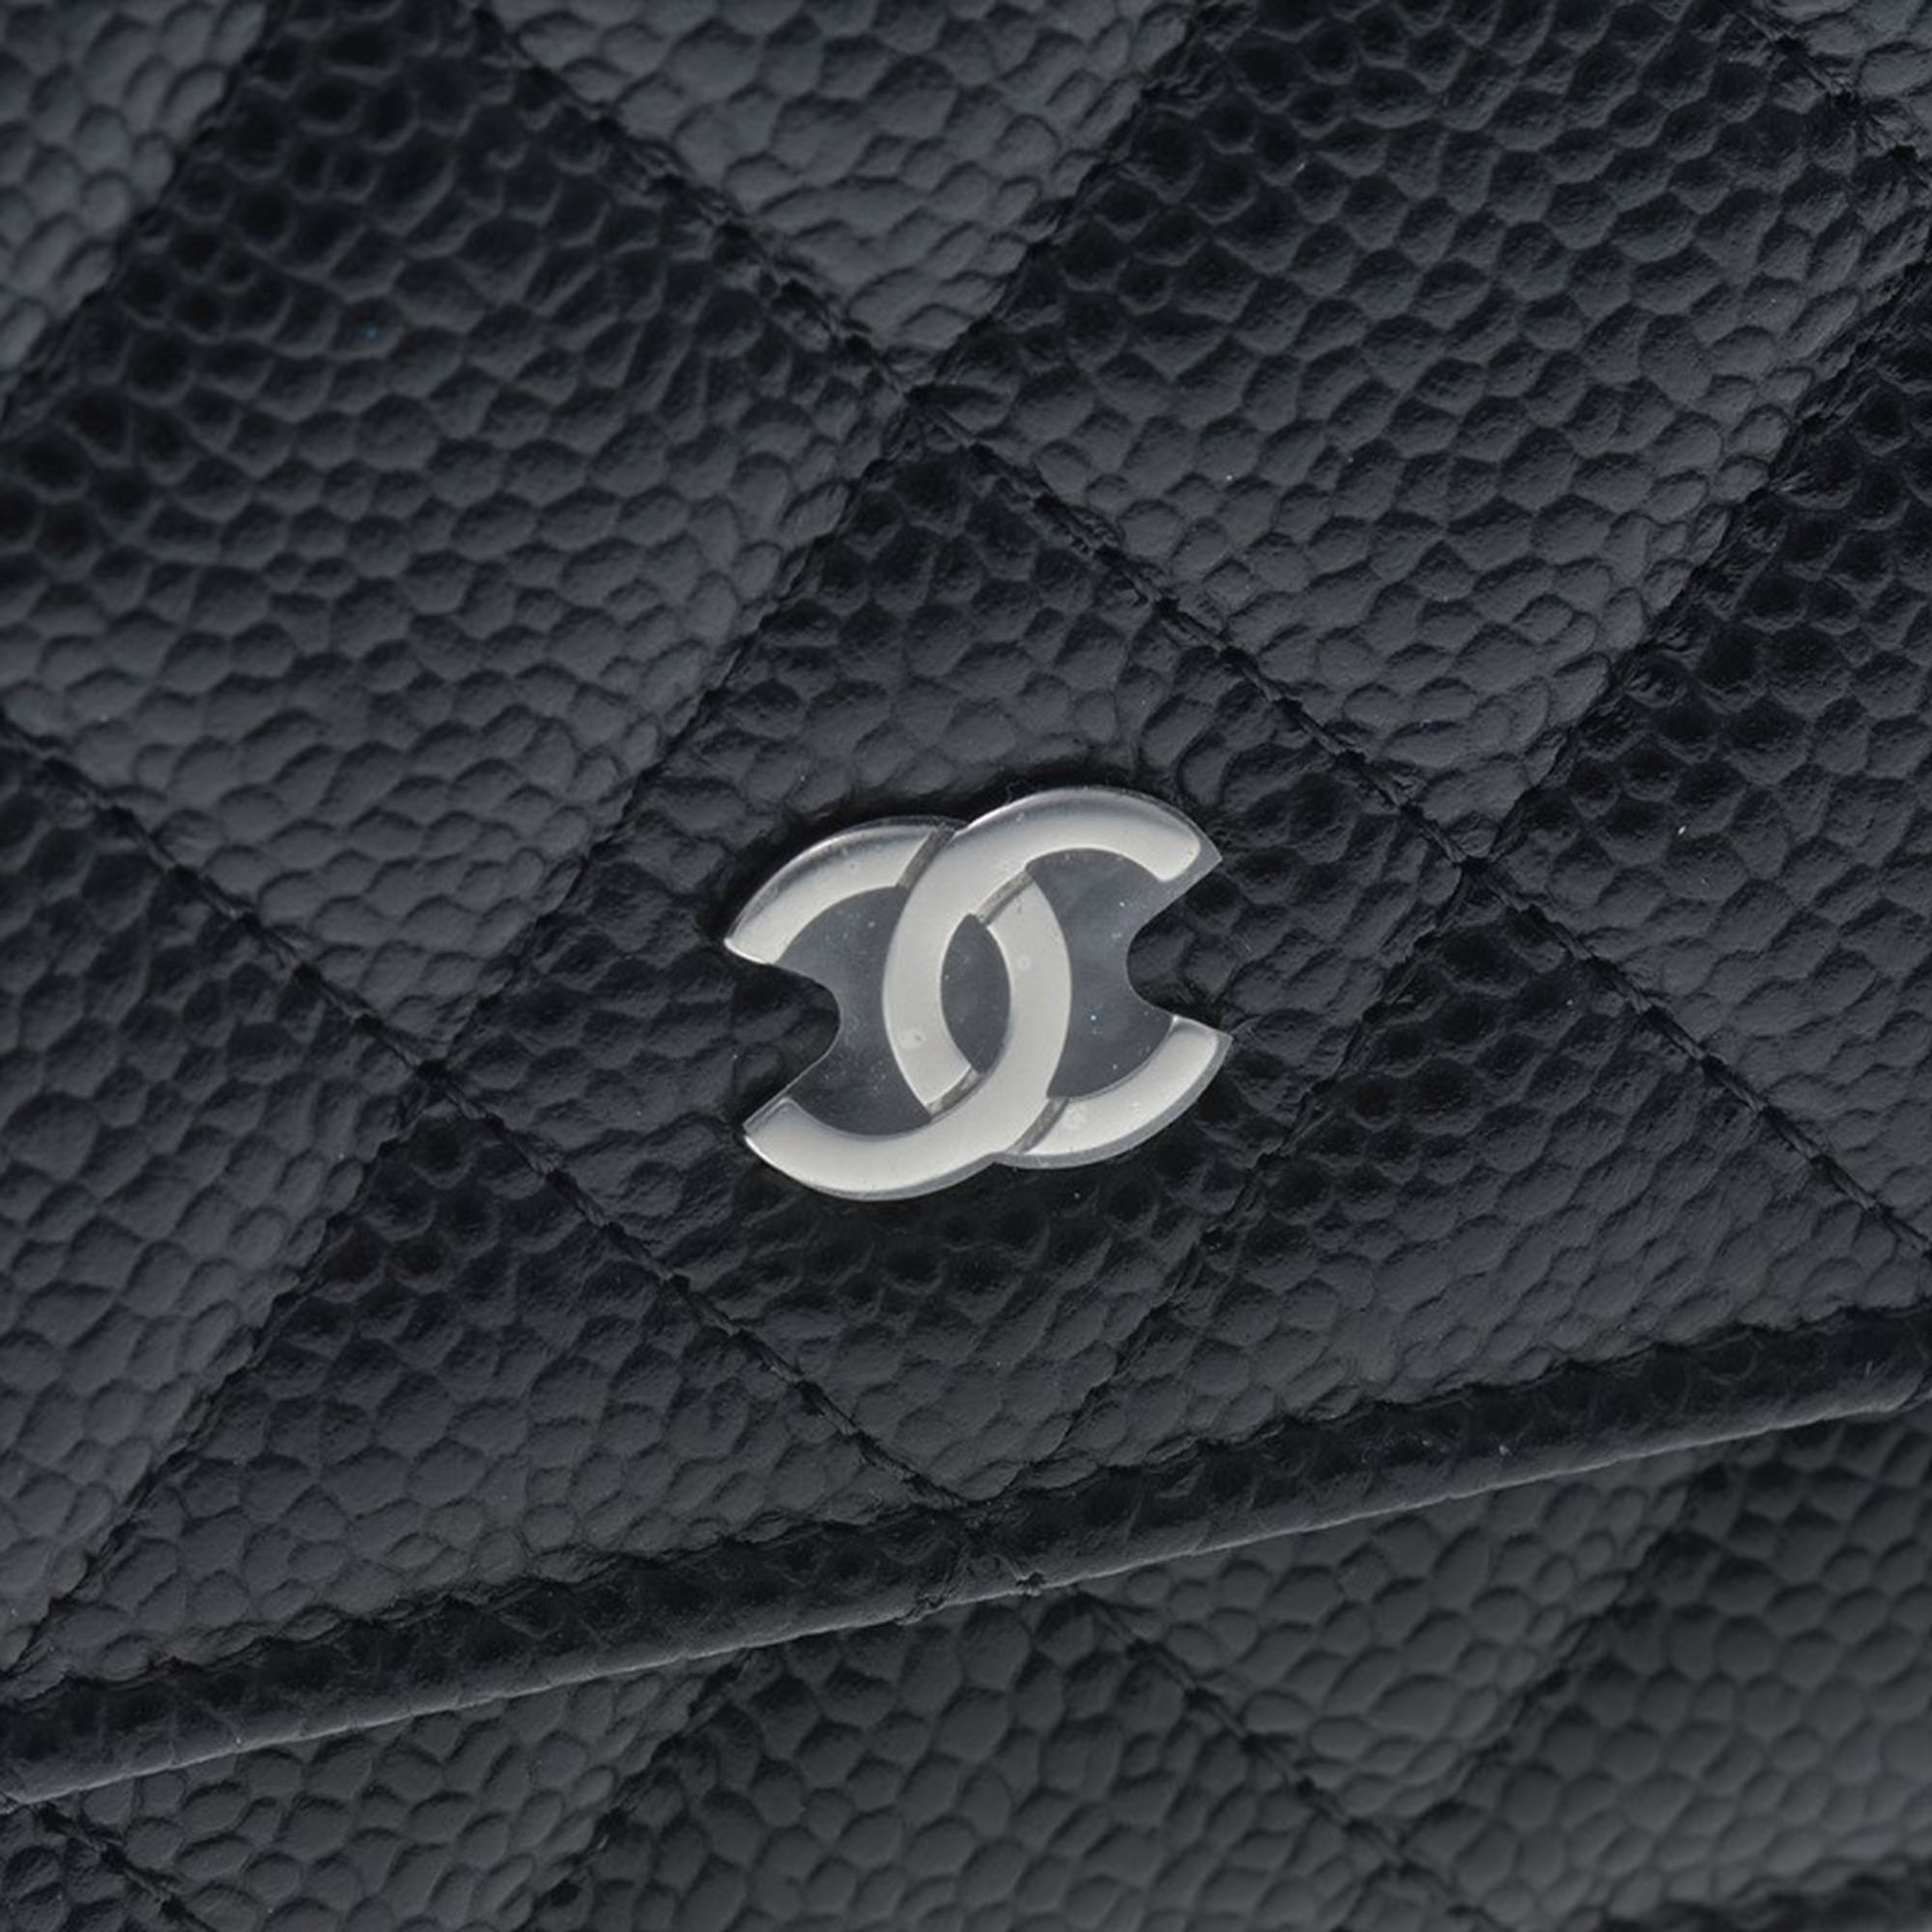 Chanel Caviar WOC Mini Crossbody Bag